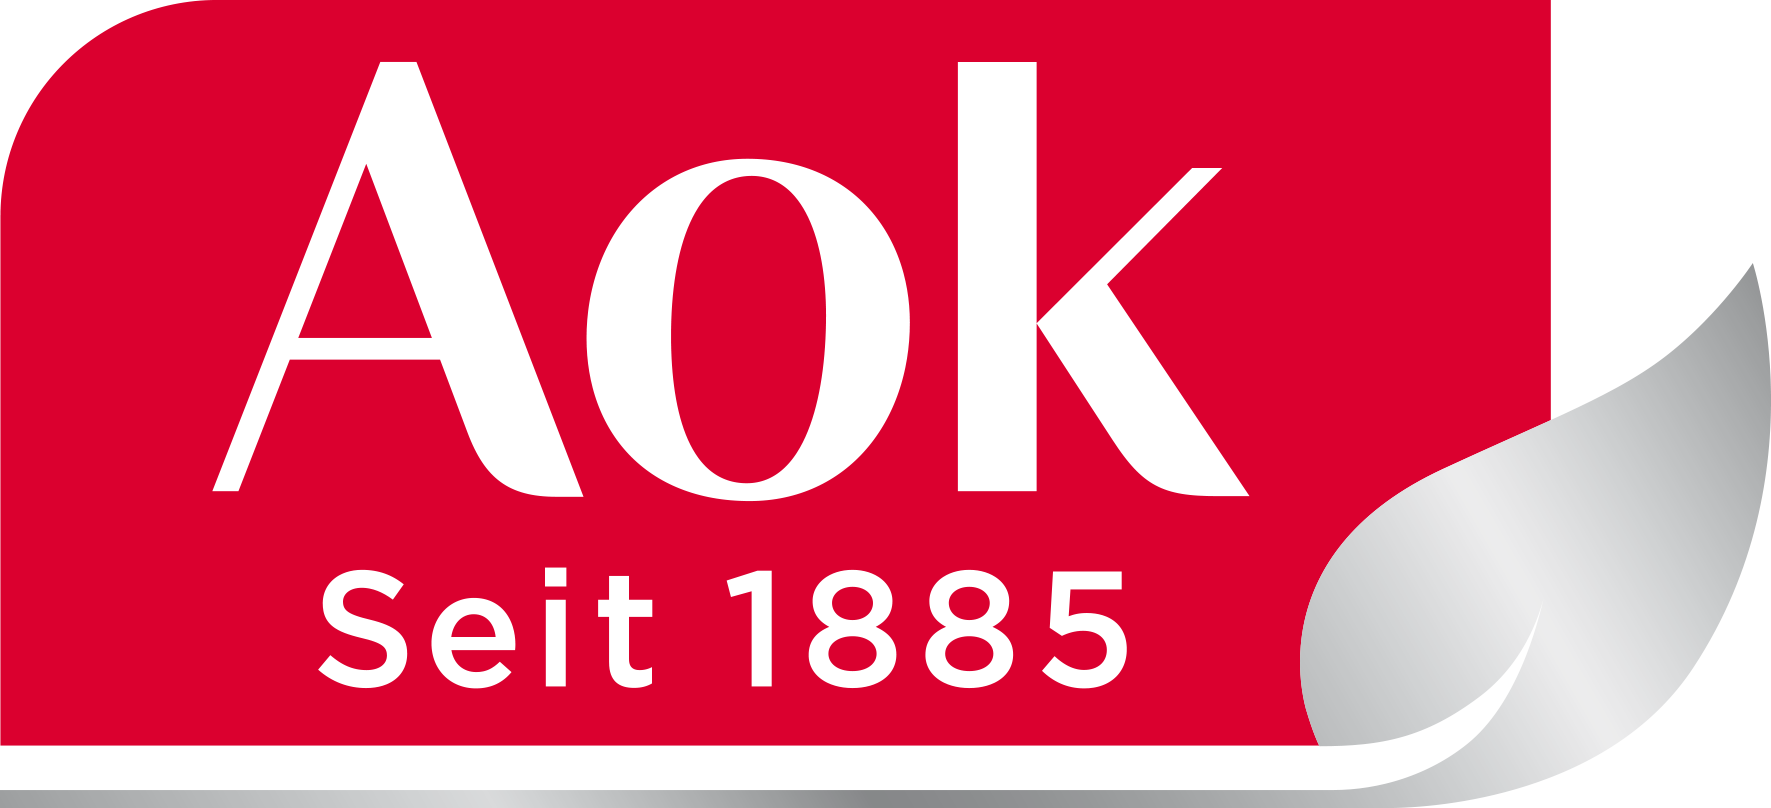 AOK Logo. Format: EPS